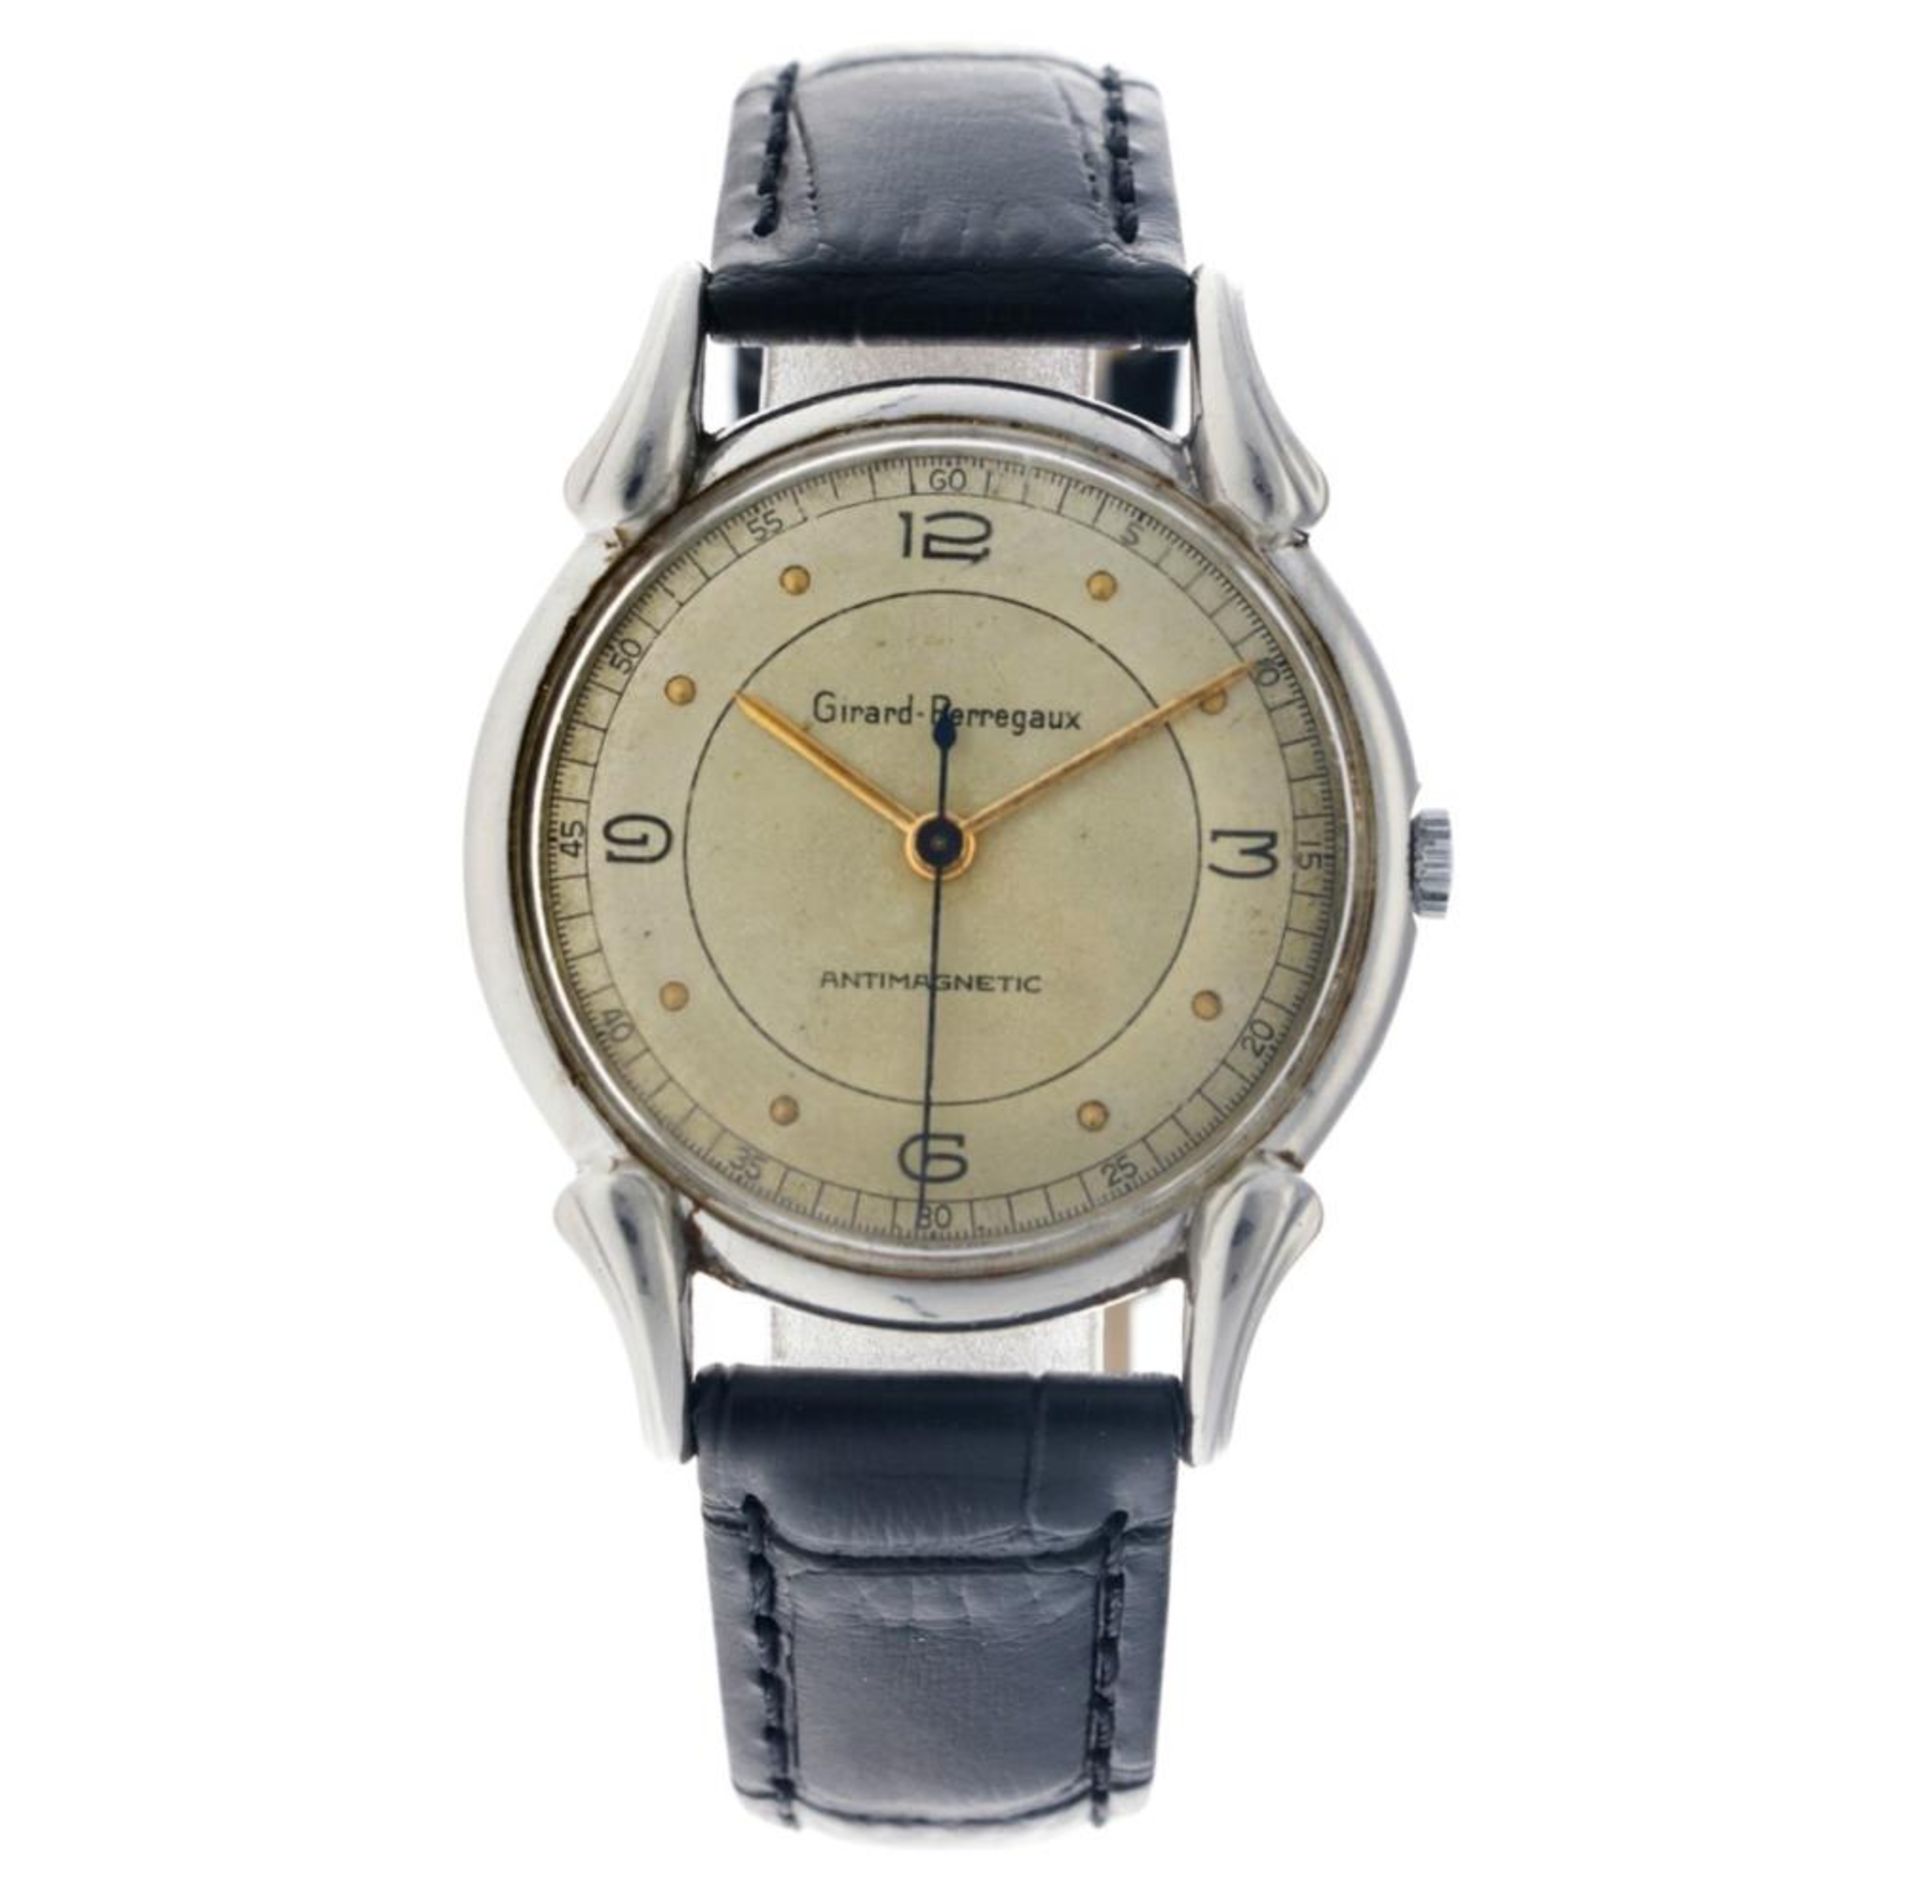 Girard-Perregaux Dogleg 494779 - Men's watch - approx. 1950.